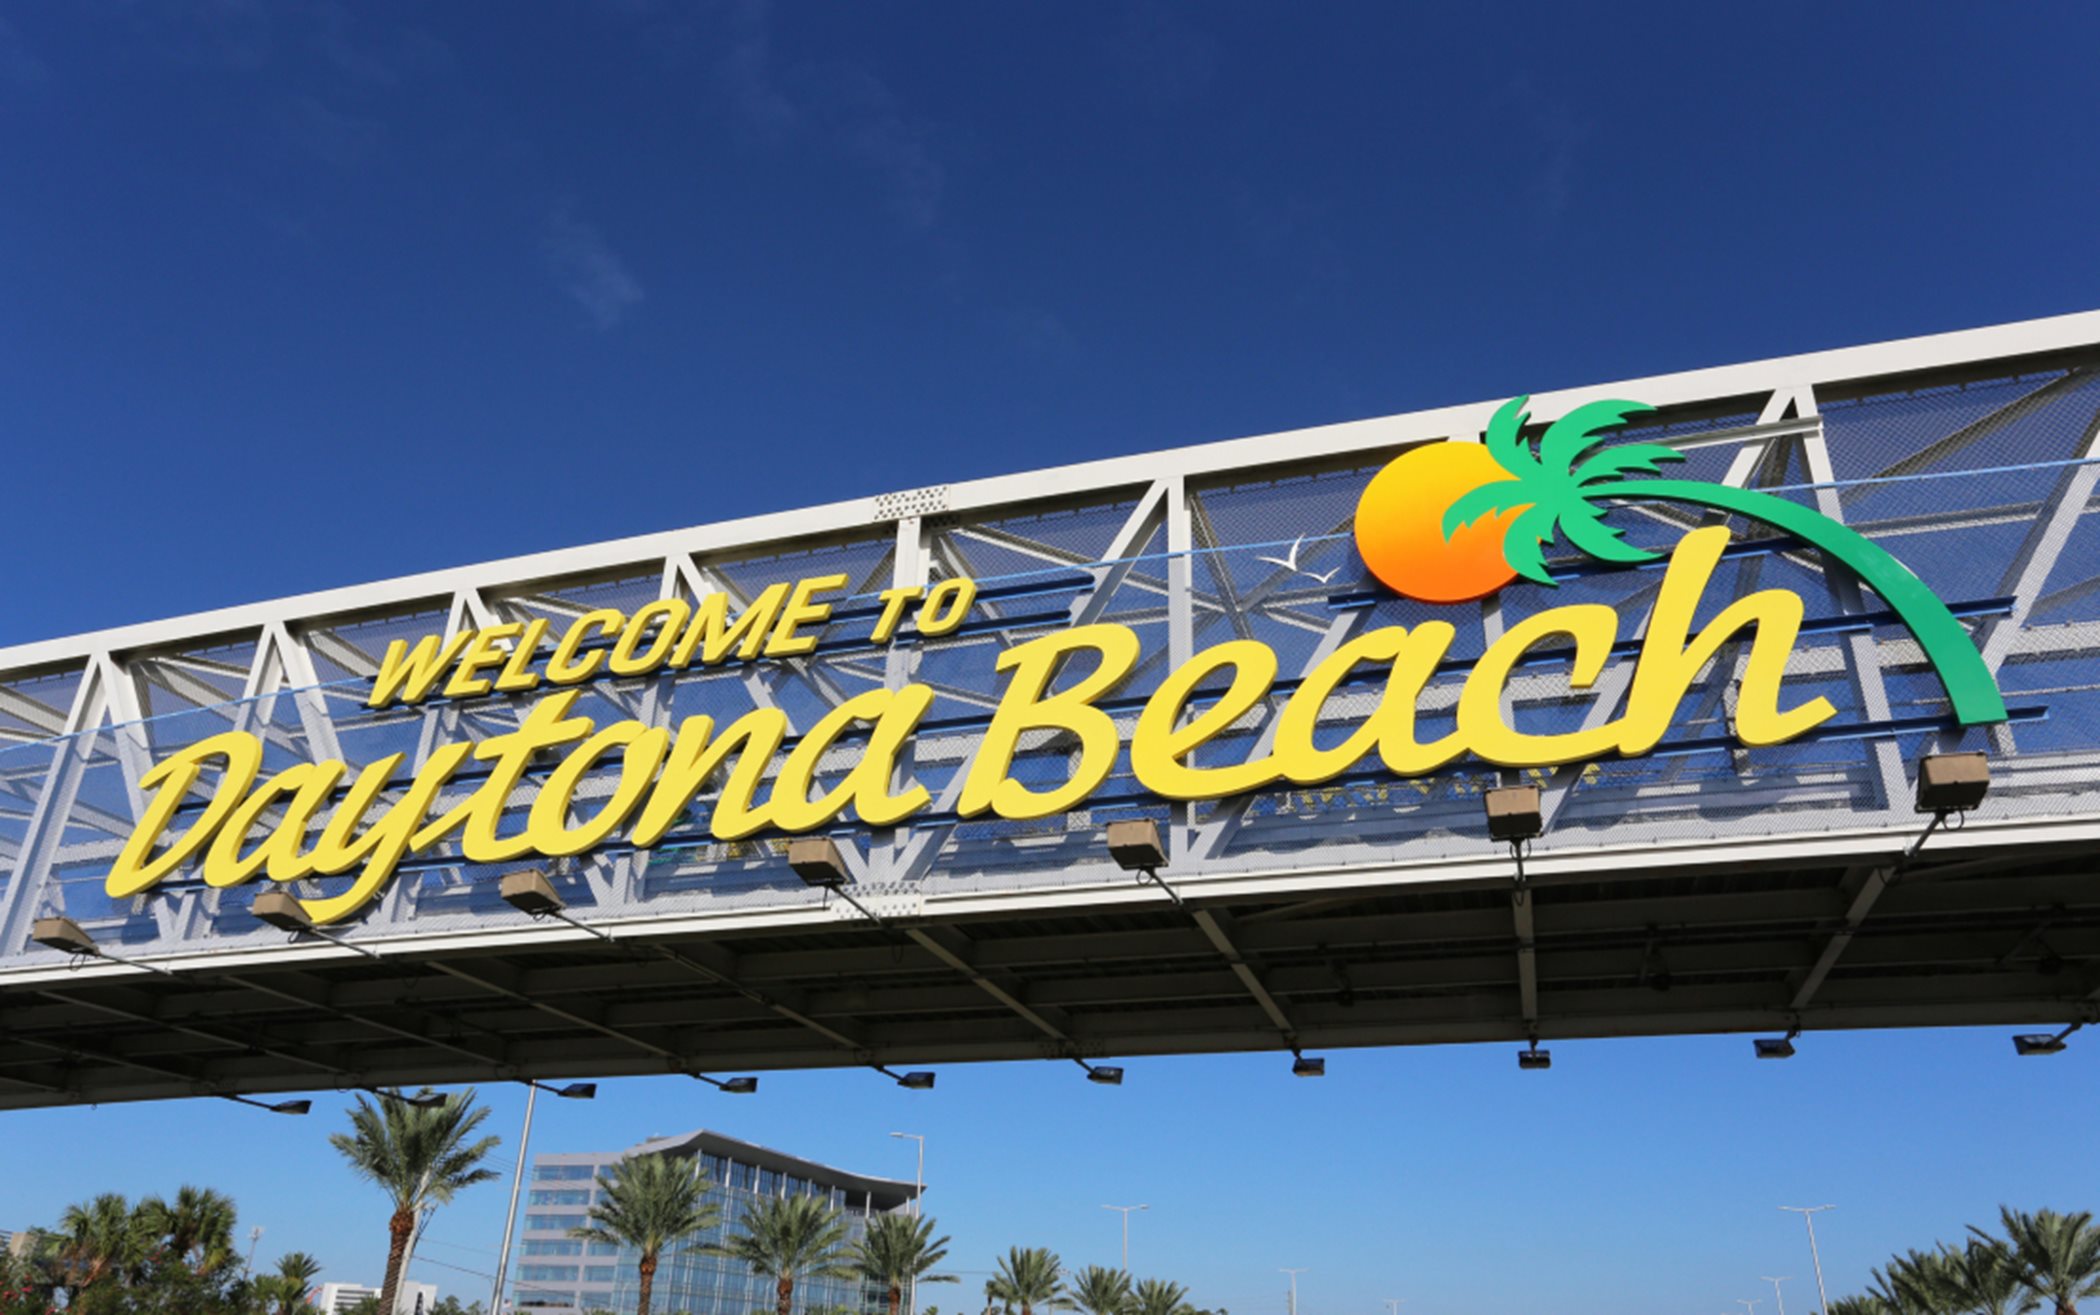 Daytona Beach Welcome sign